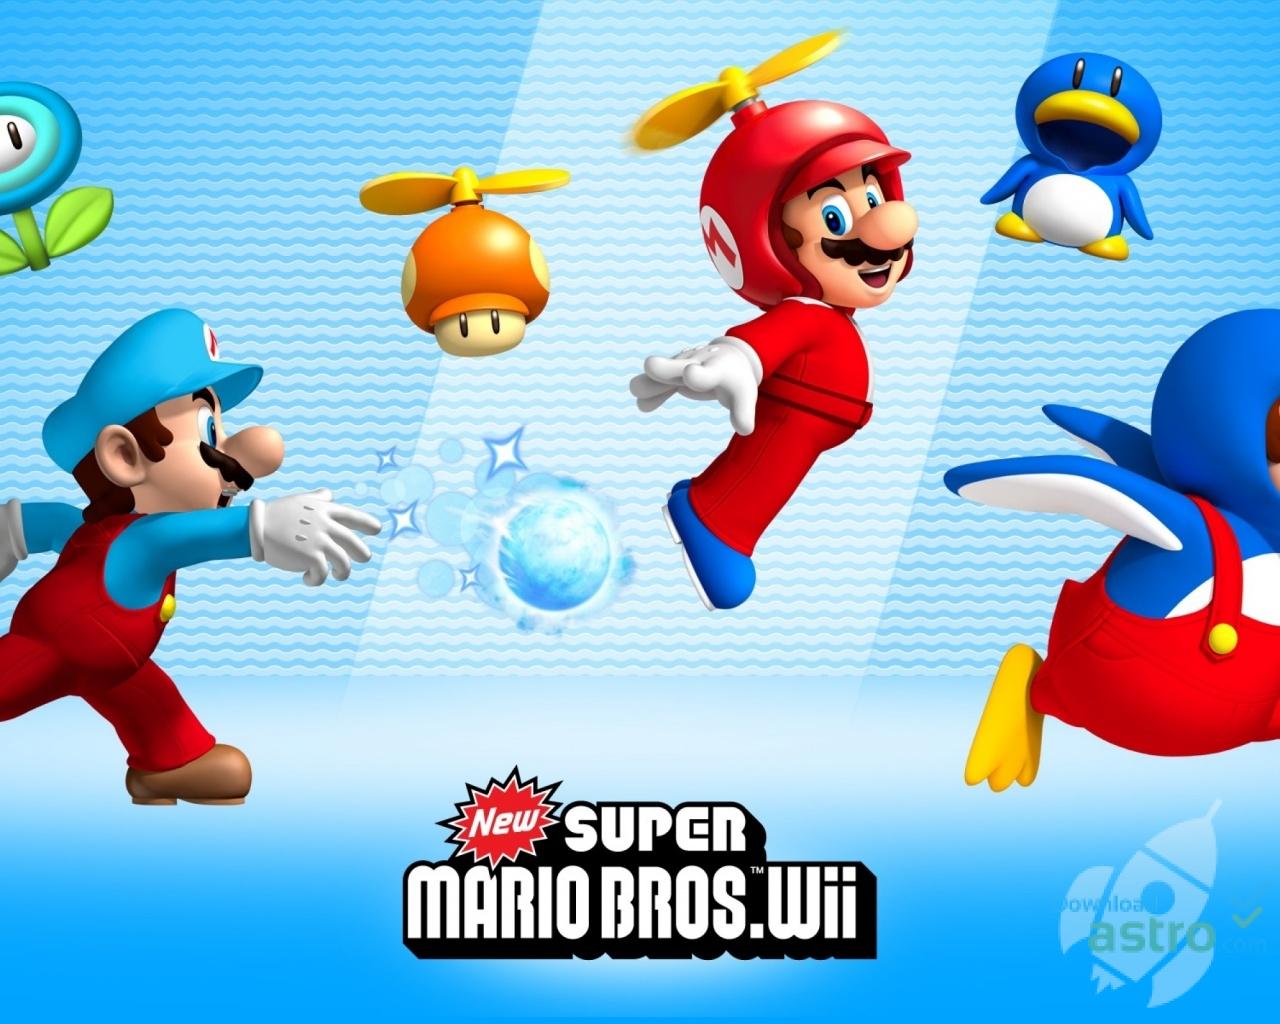 New Super Mario Bros. Wii Wallpaper version 2019 free download